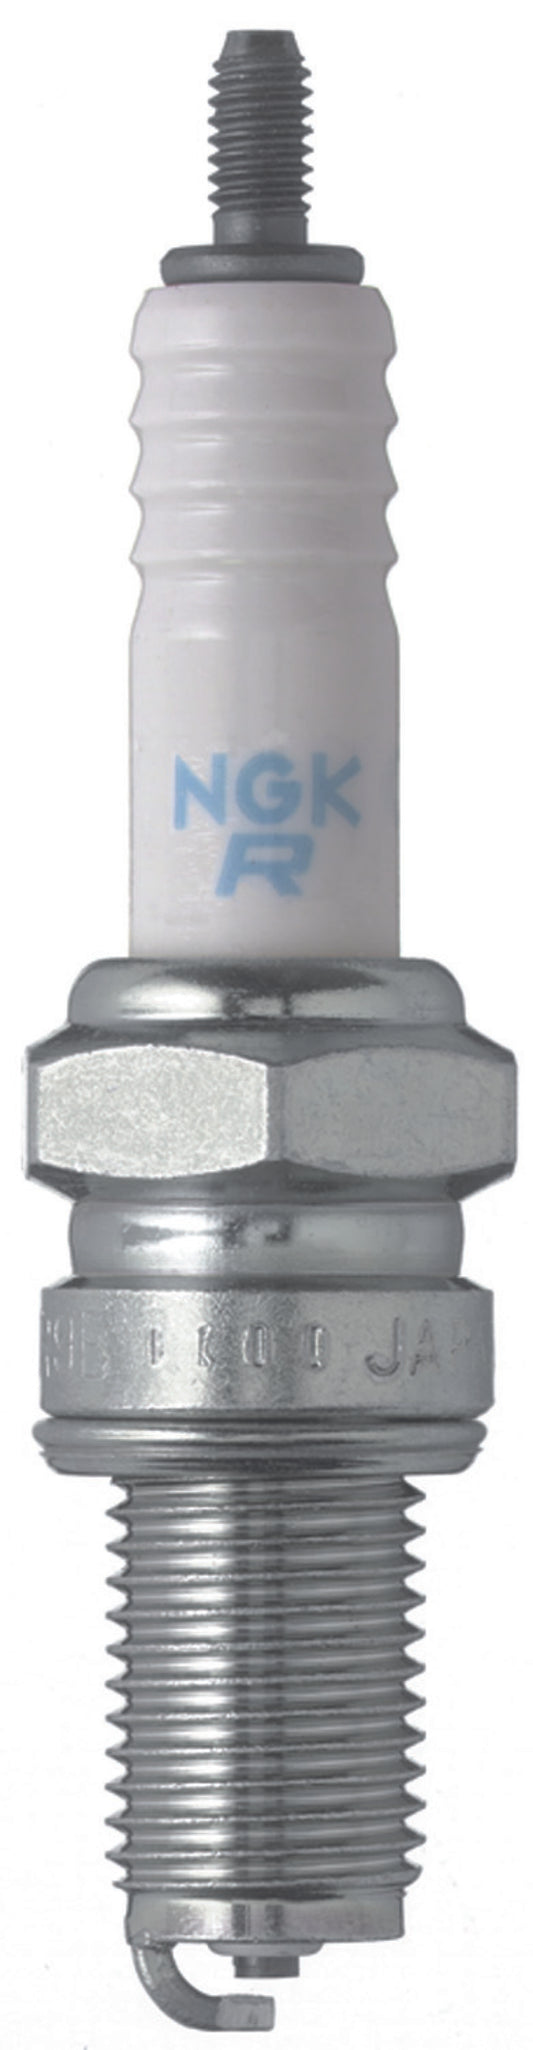 NGK Standard Spark Plug Box of 10 (JR9B)